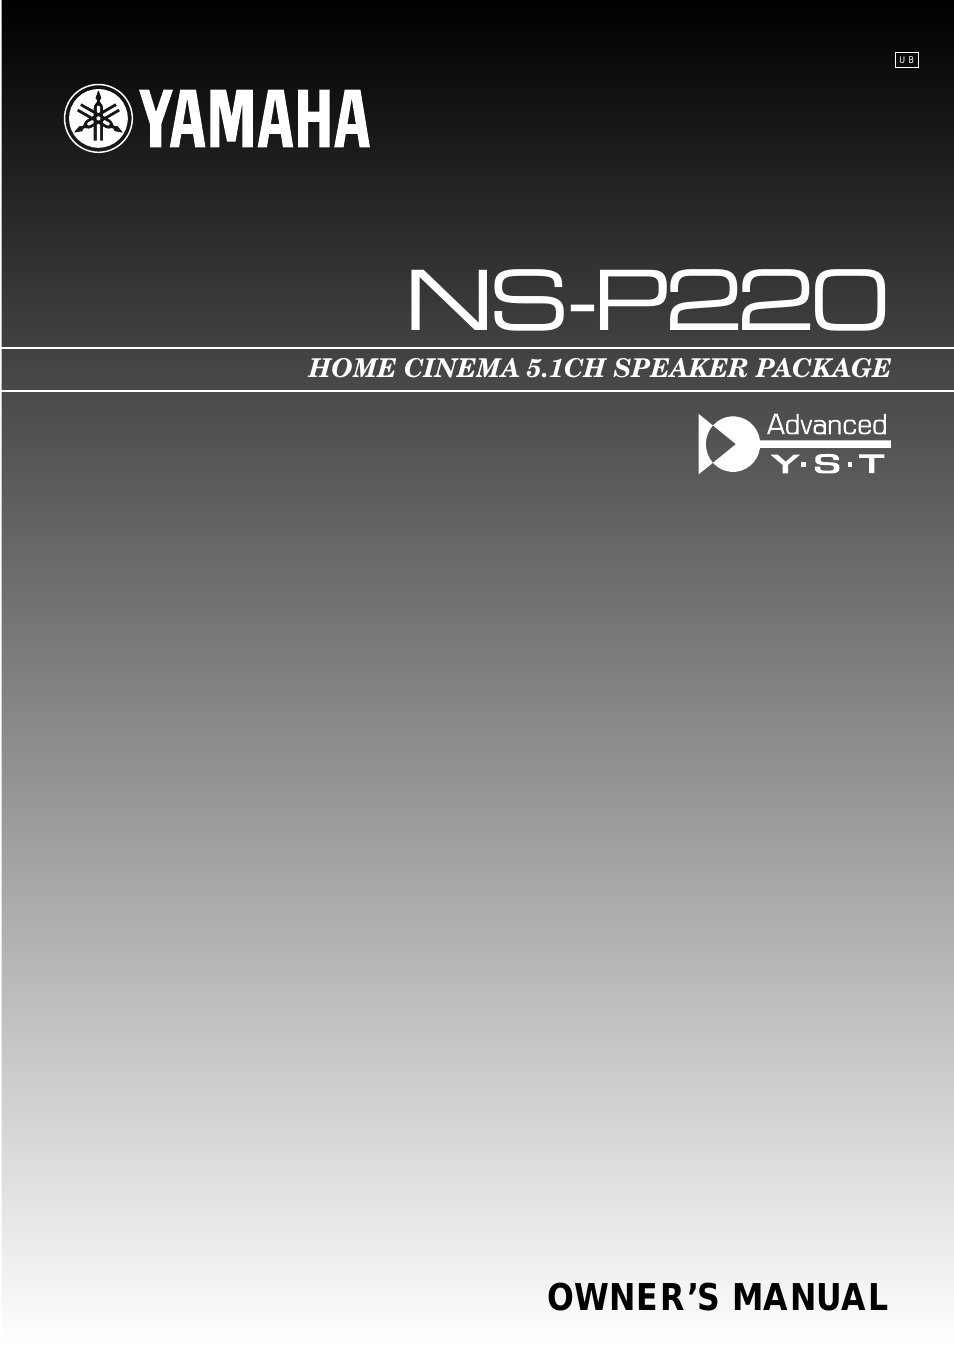 NS-P220